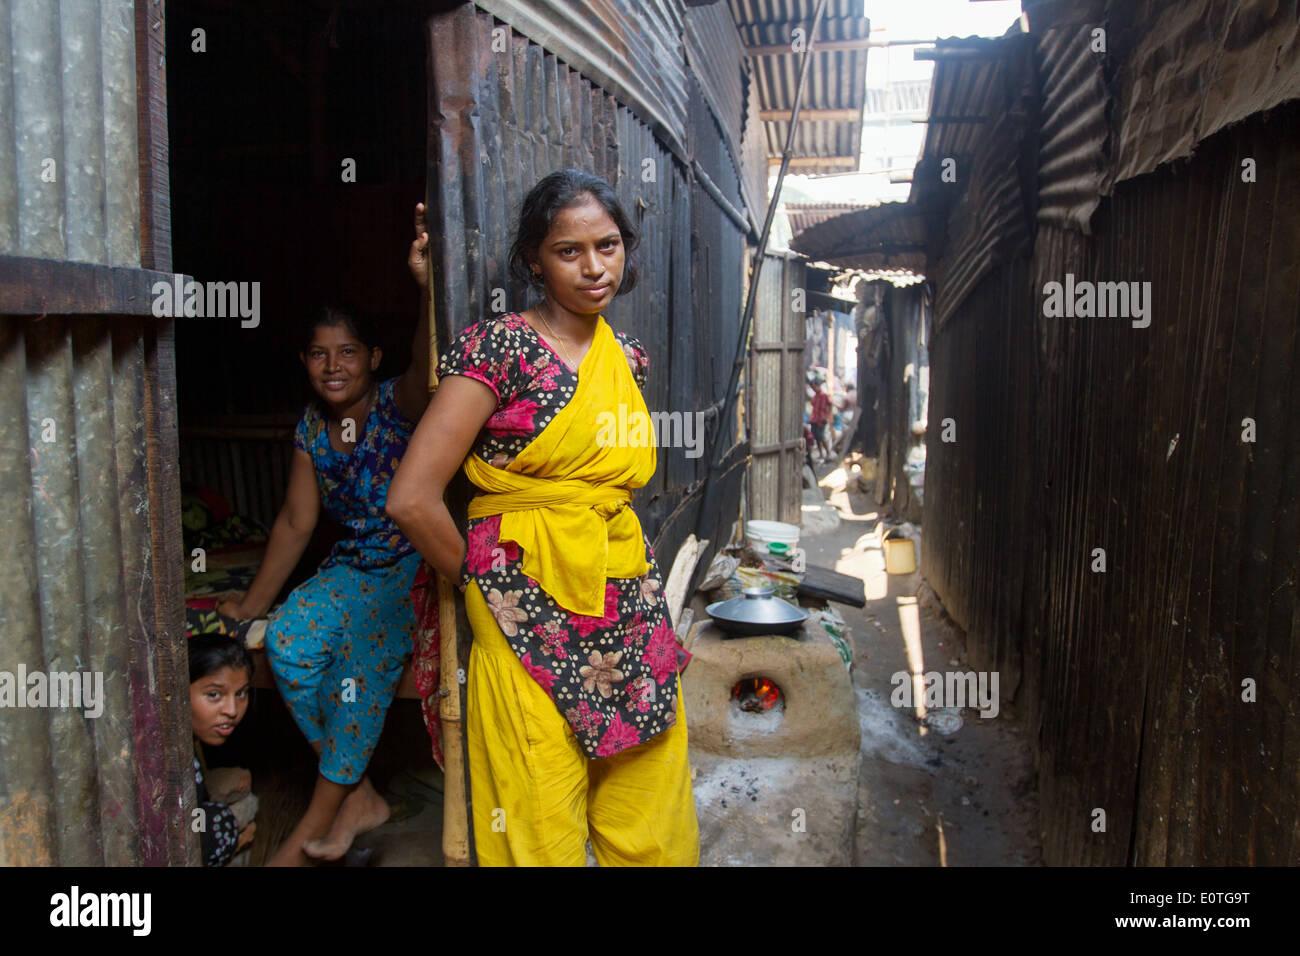 Bangladeshi Menschen in Slums Teil Dhaka in extremer Armut leben. Stockfoto